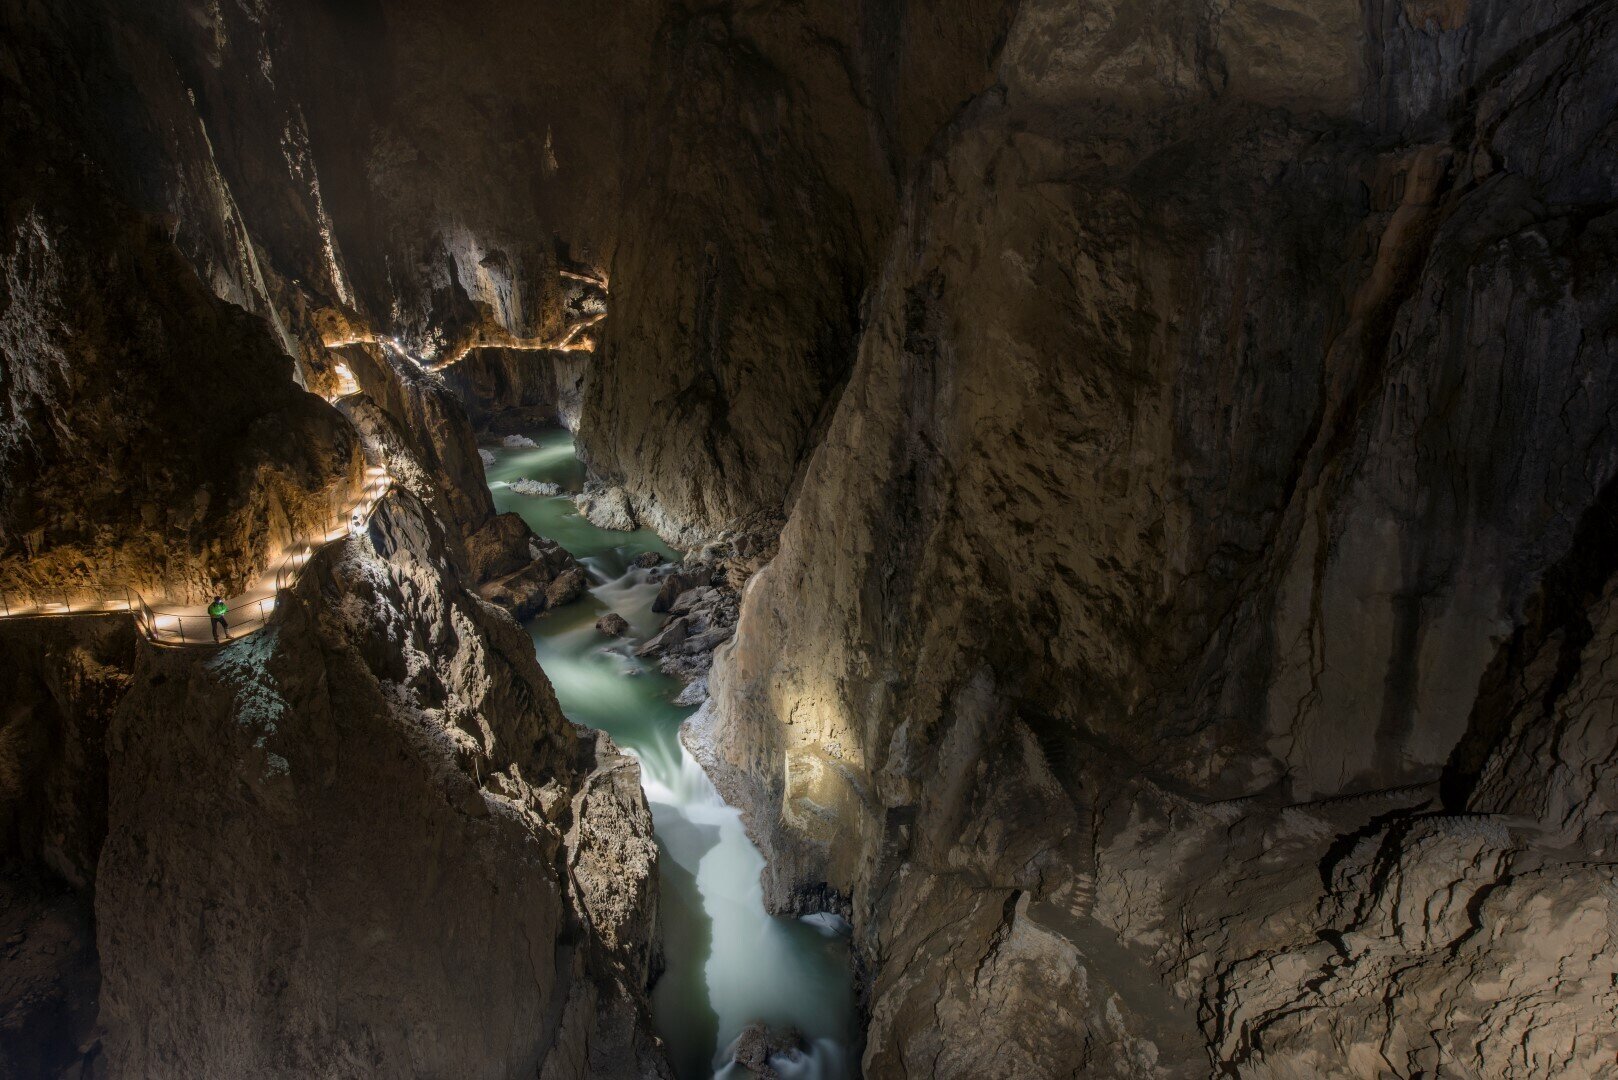 The Škocjan Caves Park